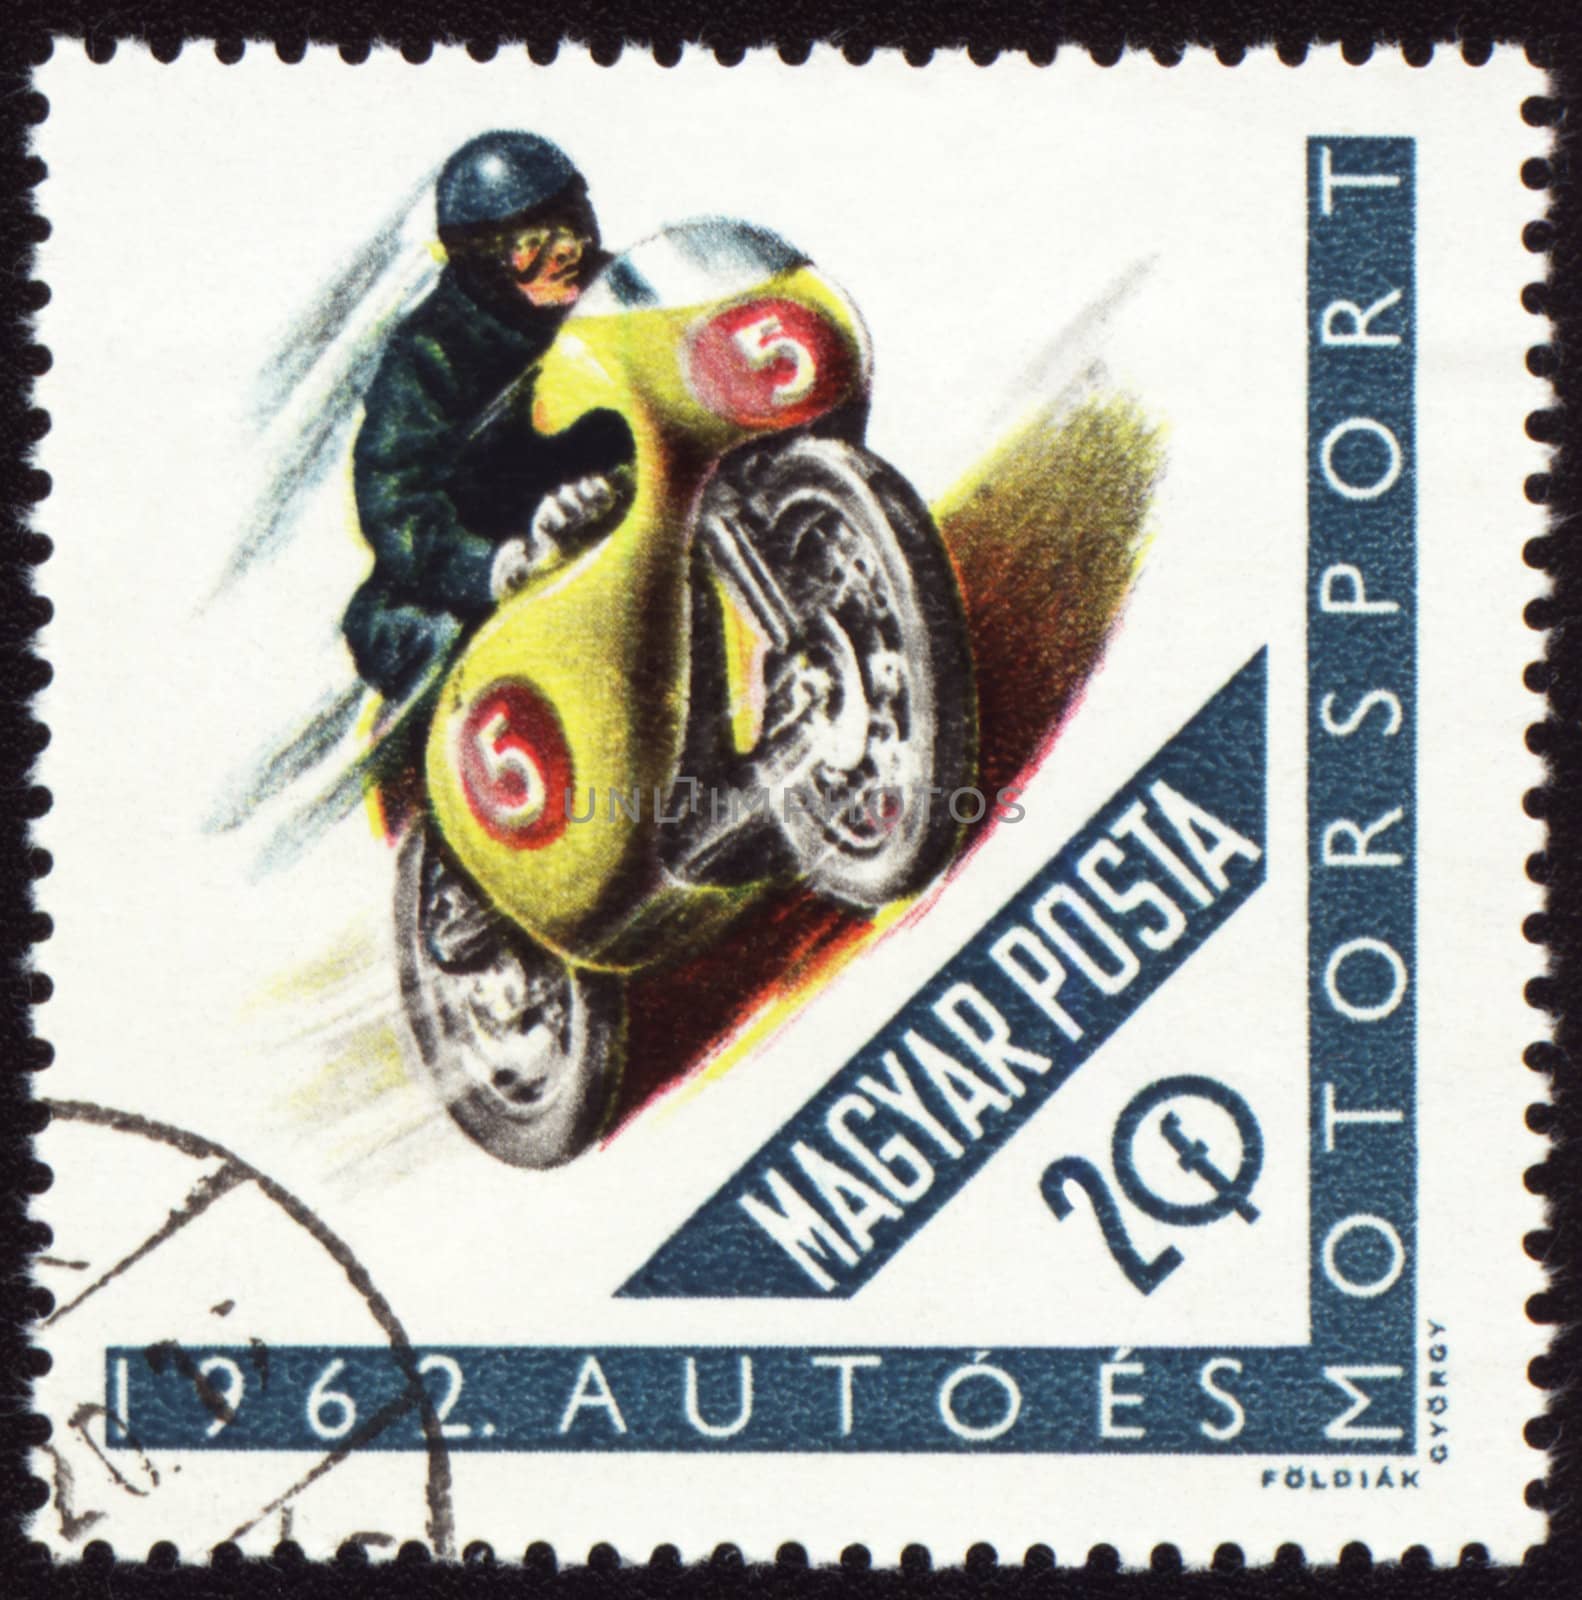 HUNGARY - CIRCA 1962: A stamp printed in Hungary shows motorcyclist, circa 1962